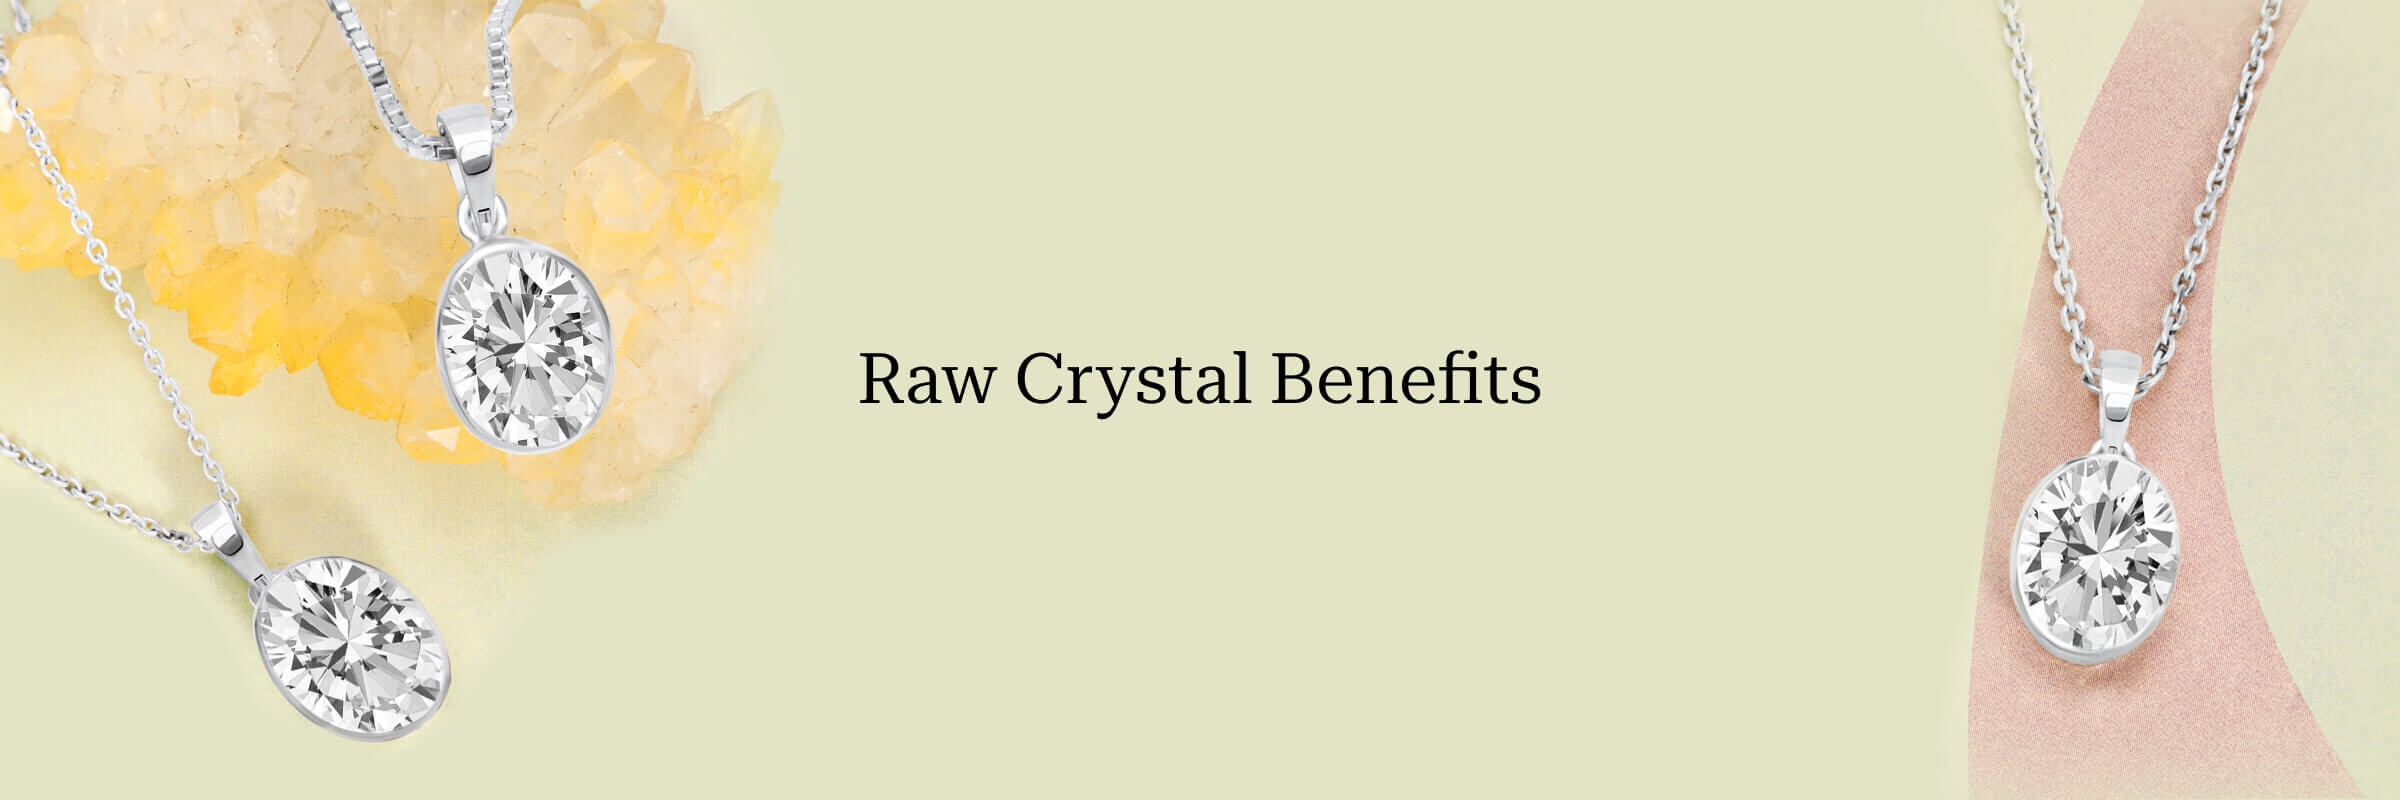 Benefits of Raw Crystal Jewelry